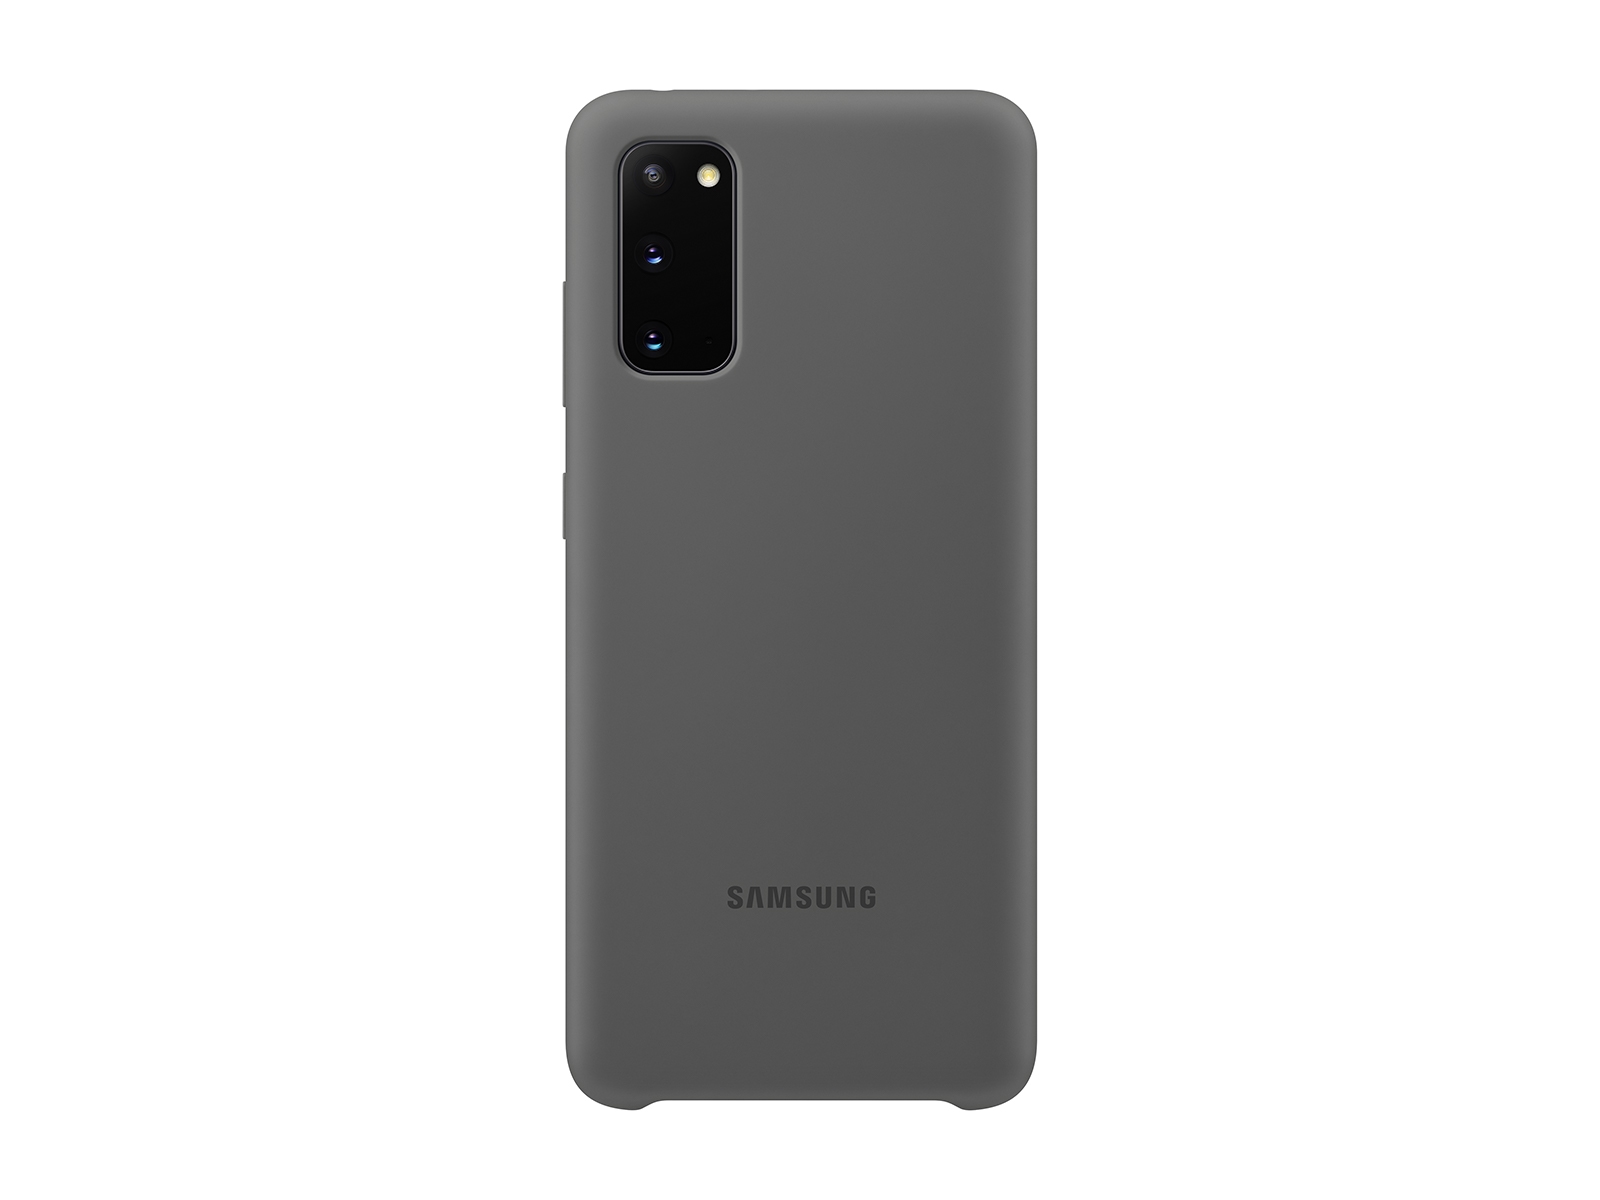 Thumbnail image of Galaxy S20 5G LED Back cover, Gray